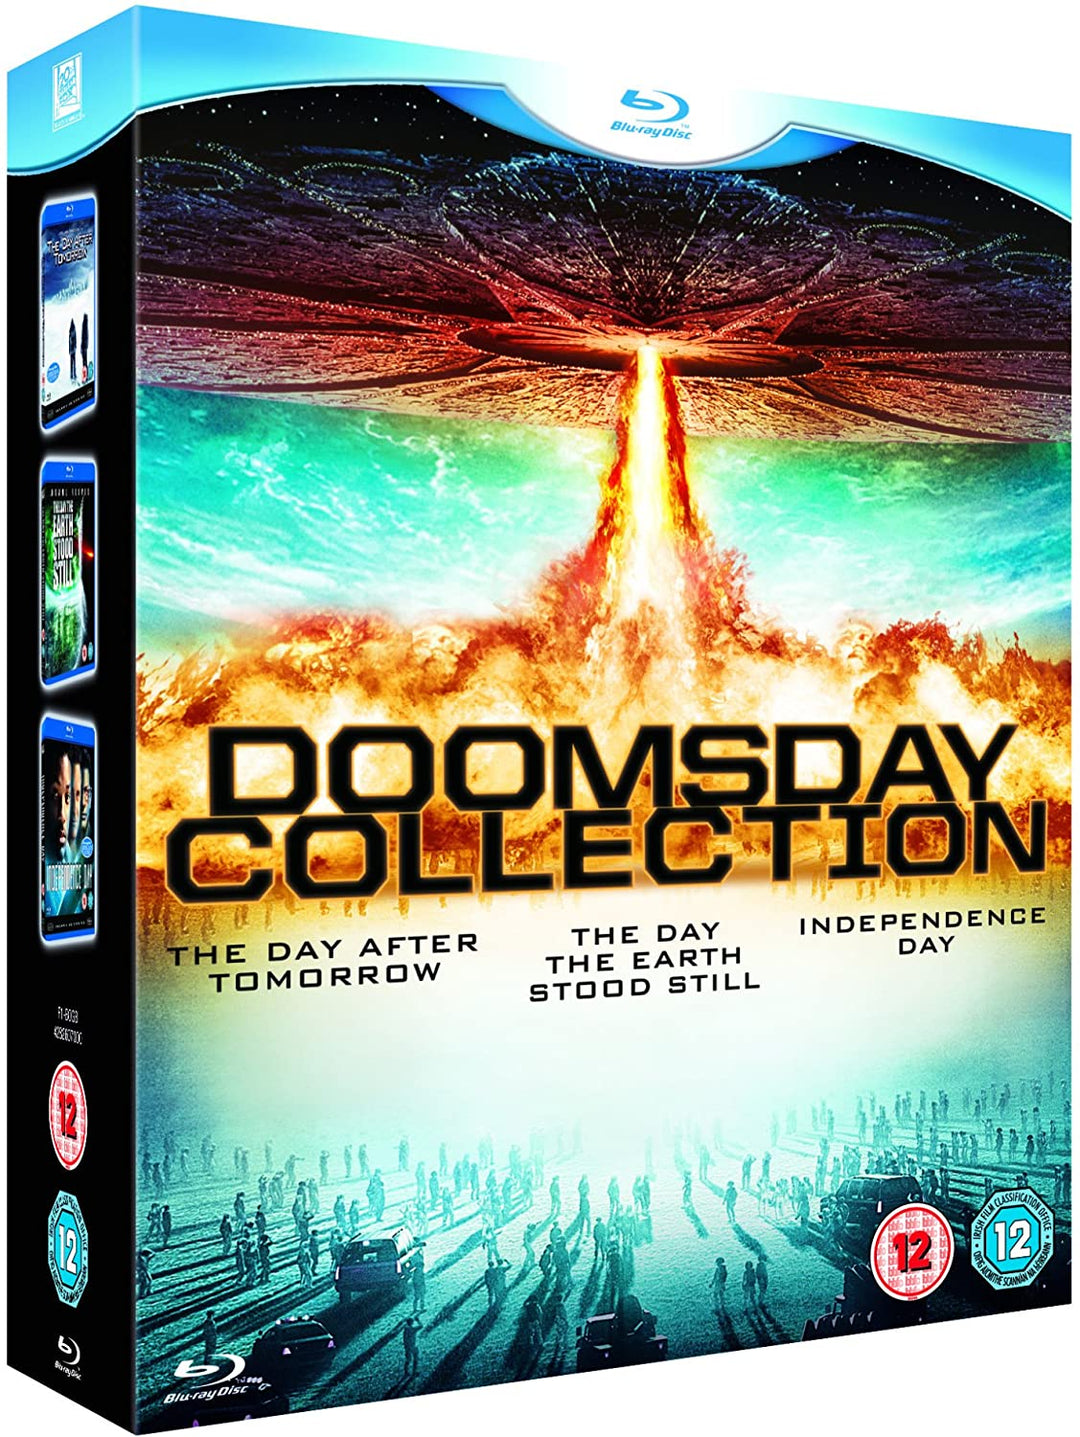 Doomsday-Sammlung [Blu-ray] [1996]